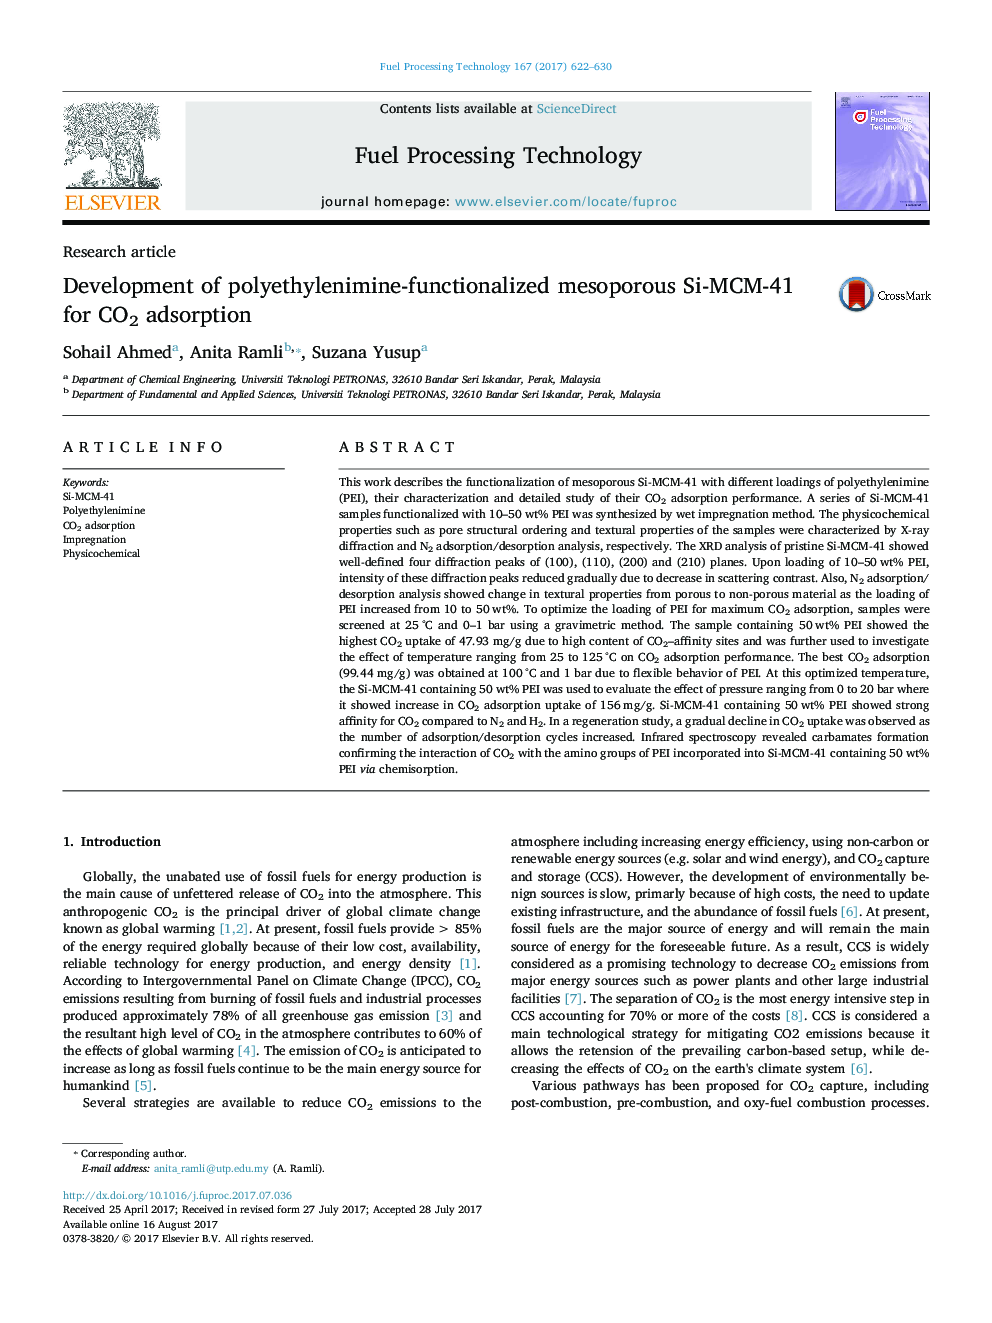 Development of polyethylenimine-functionalized mesoporous Si-MCM-41 for CO2 adsorption